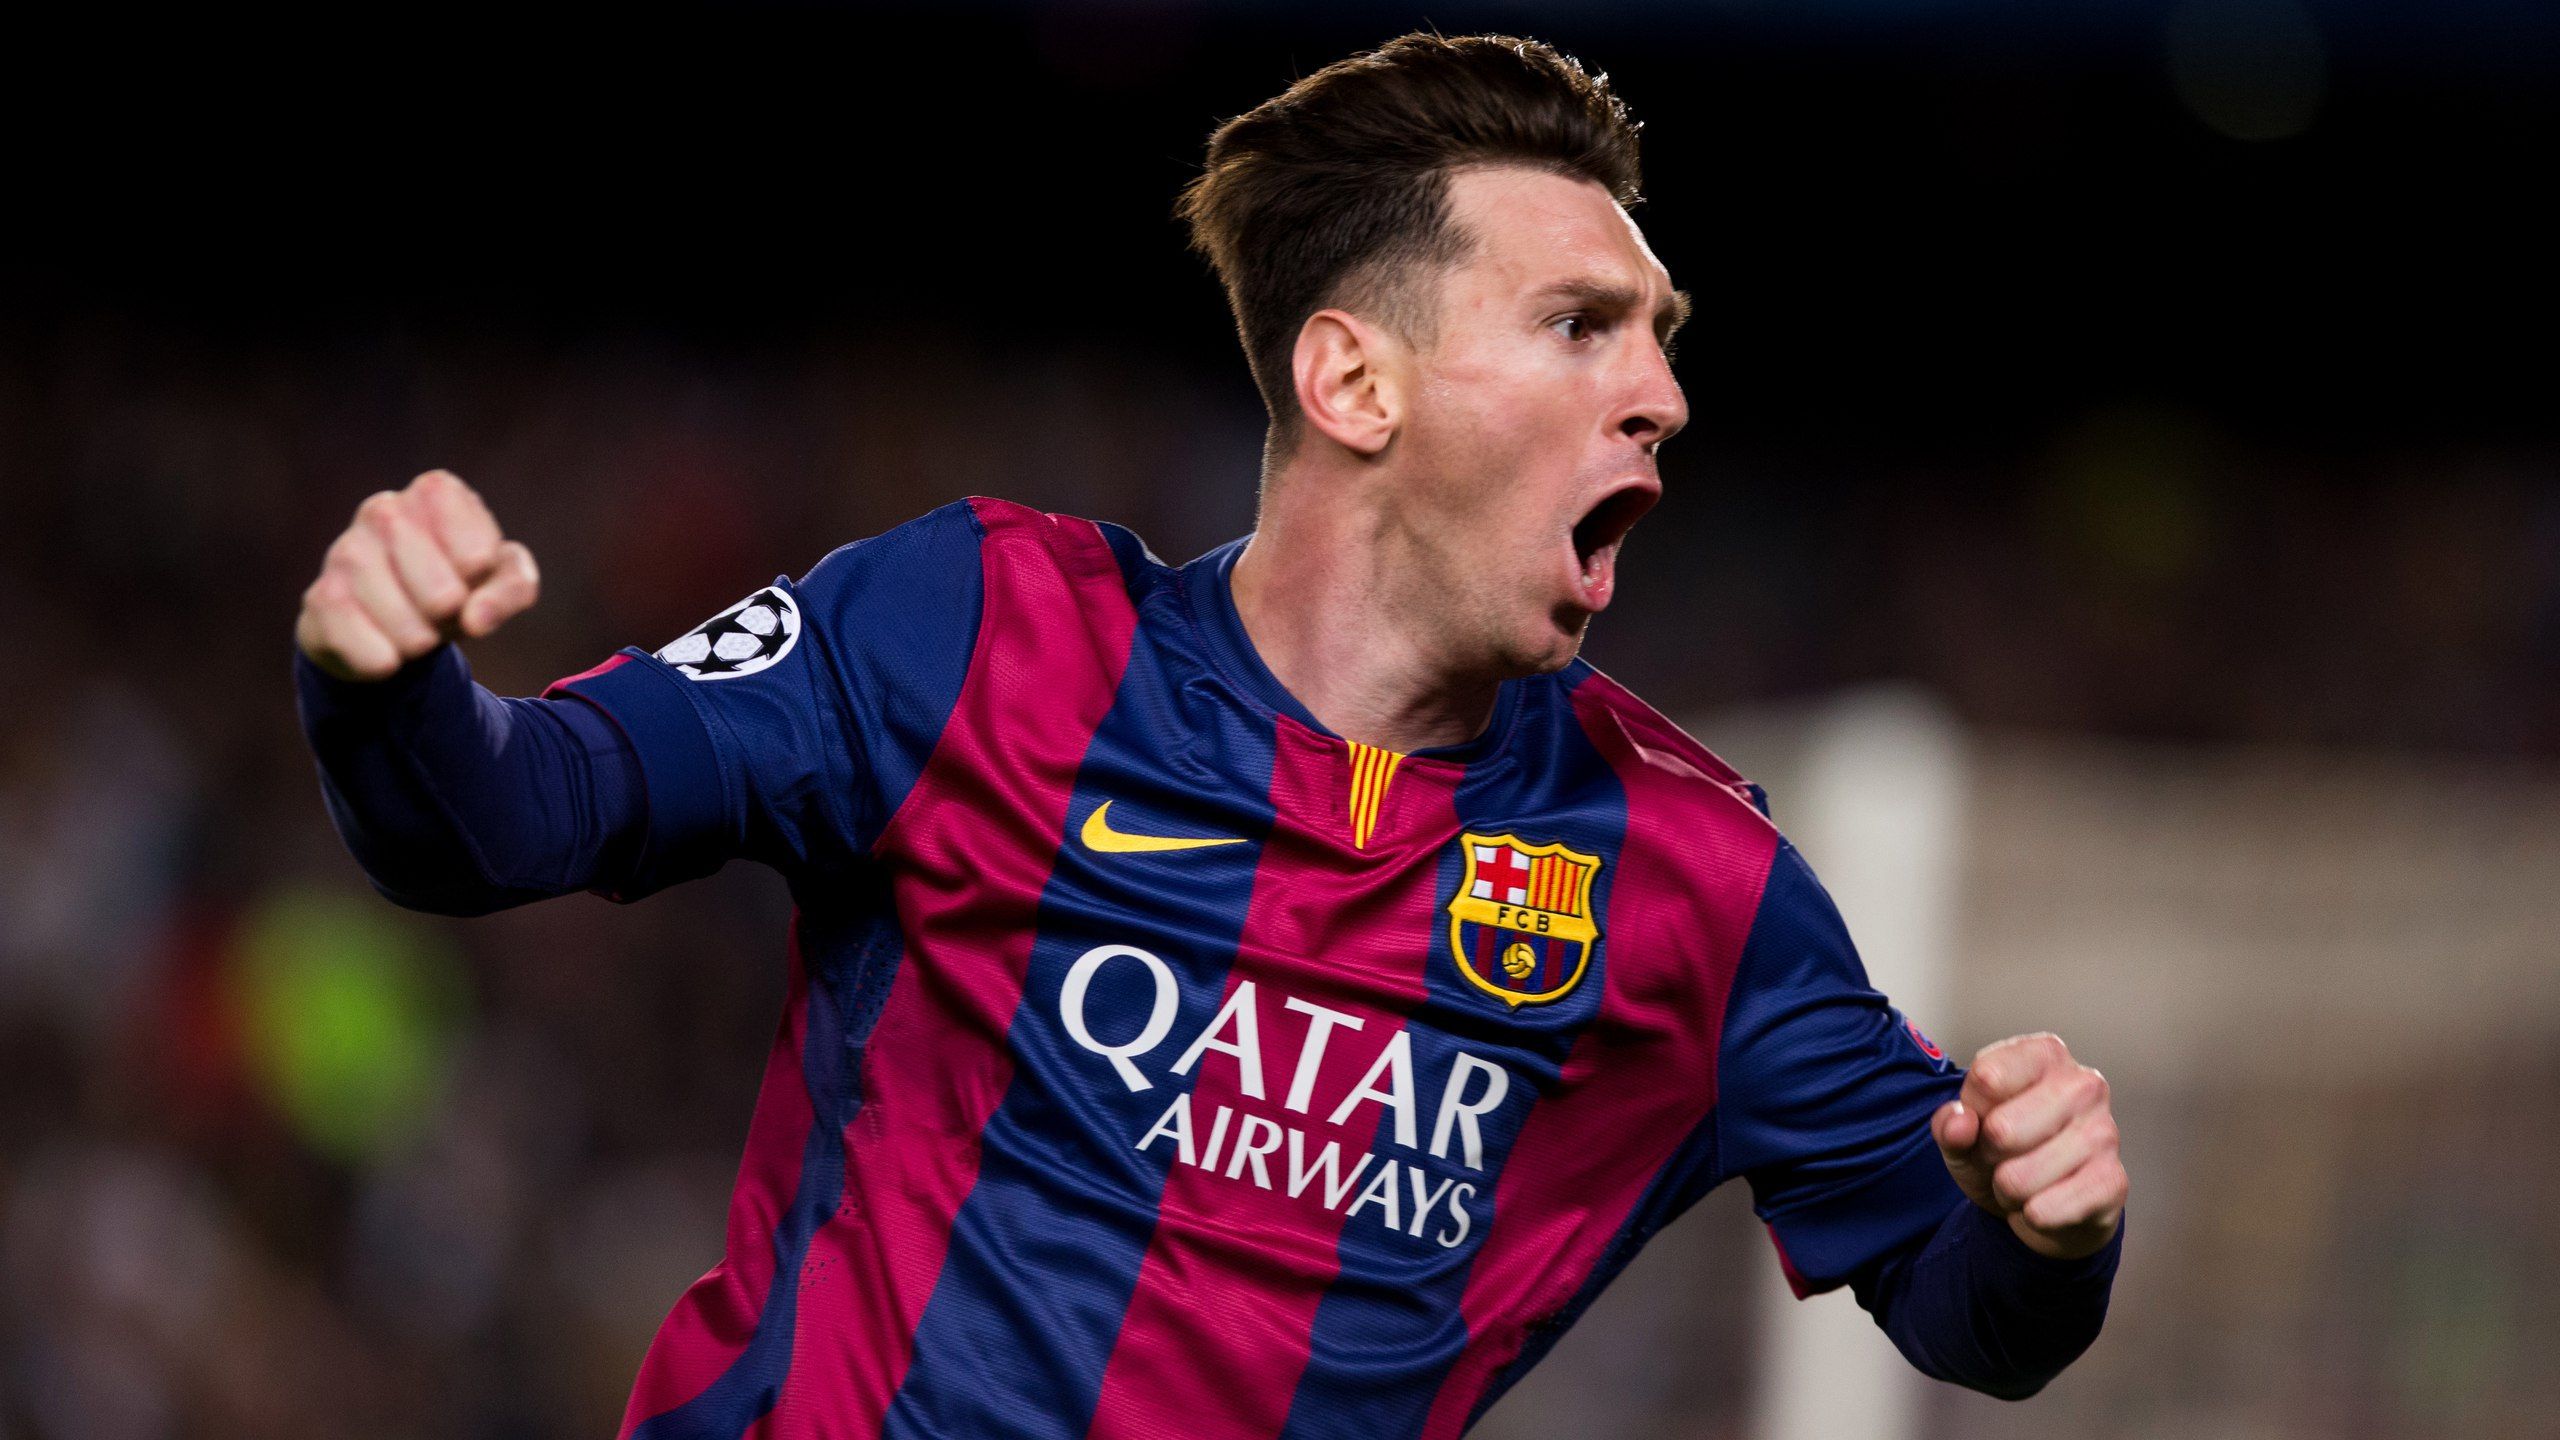 Lionel Messi Wallpaper Image Photo Picture Background